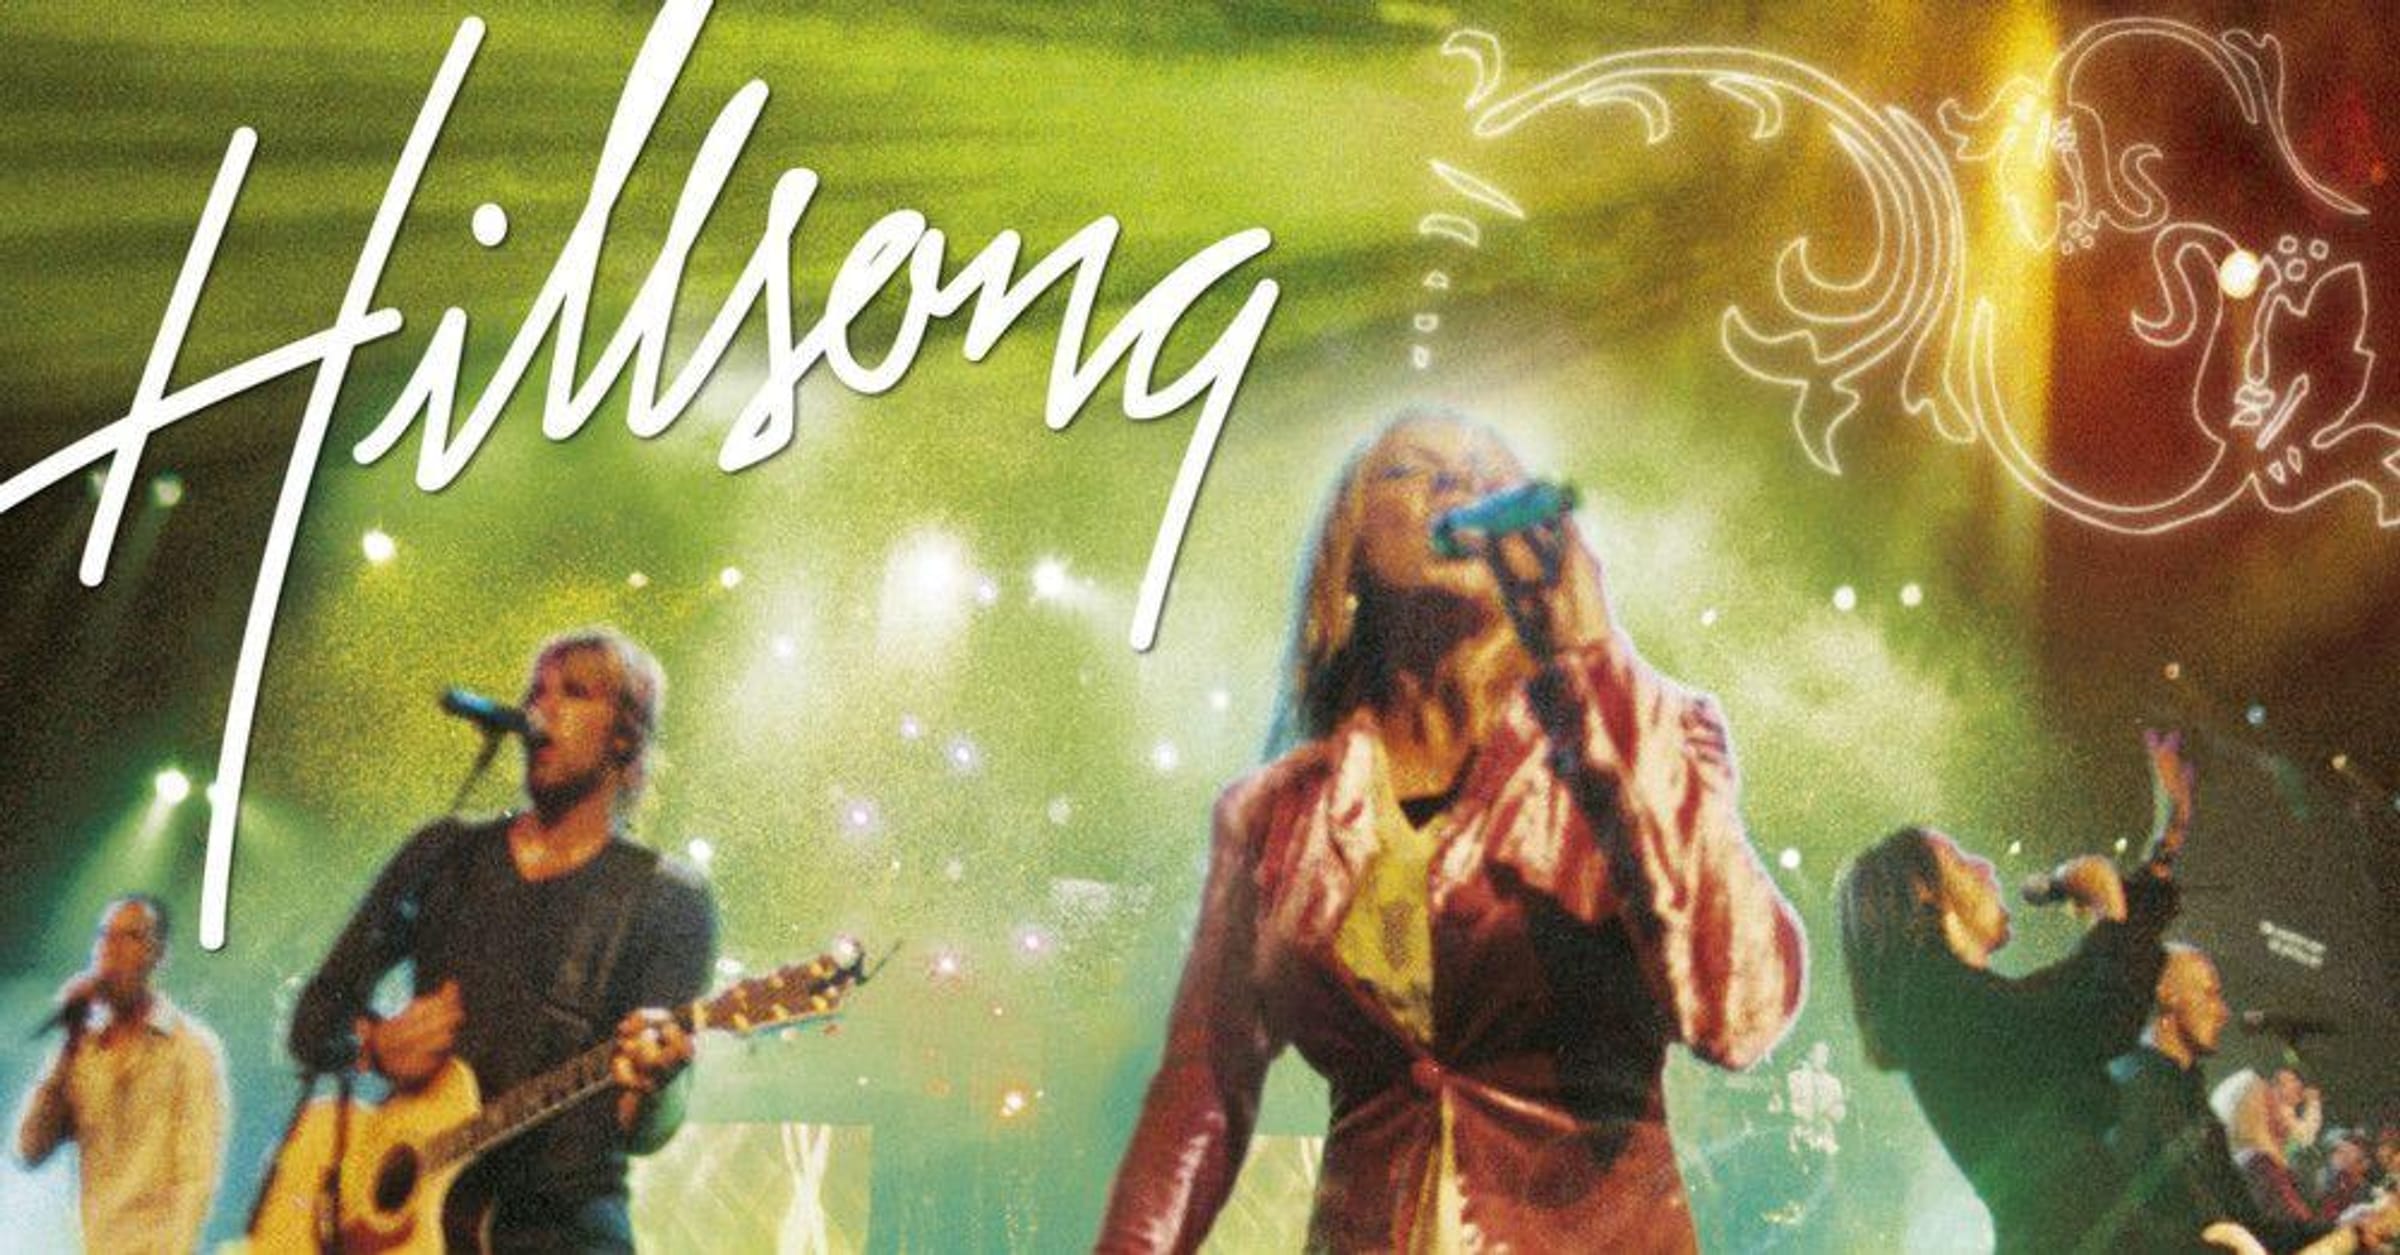 Hillsong: Let Hope Rise (Live/Original Motion Picture Soundtrack) -  Hillsong Worship (CD)